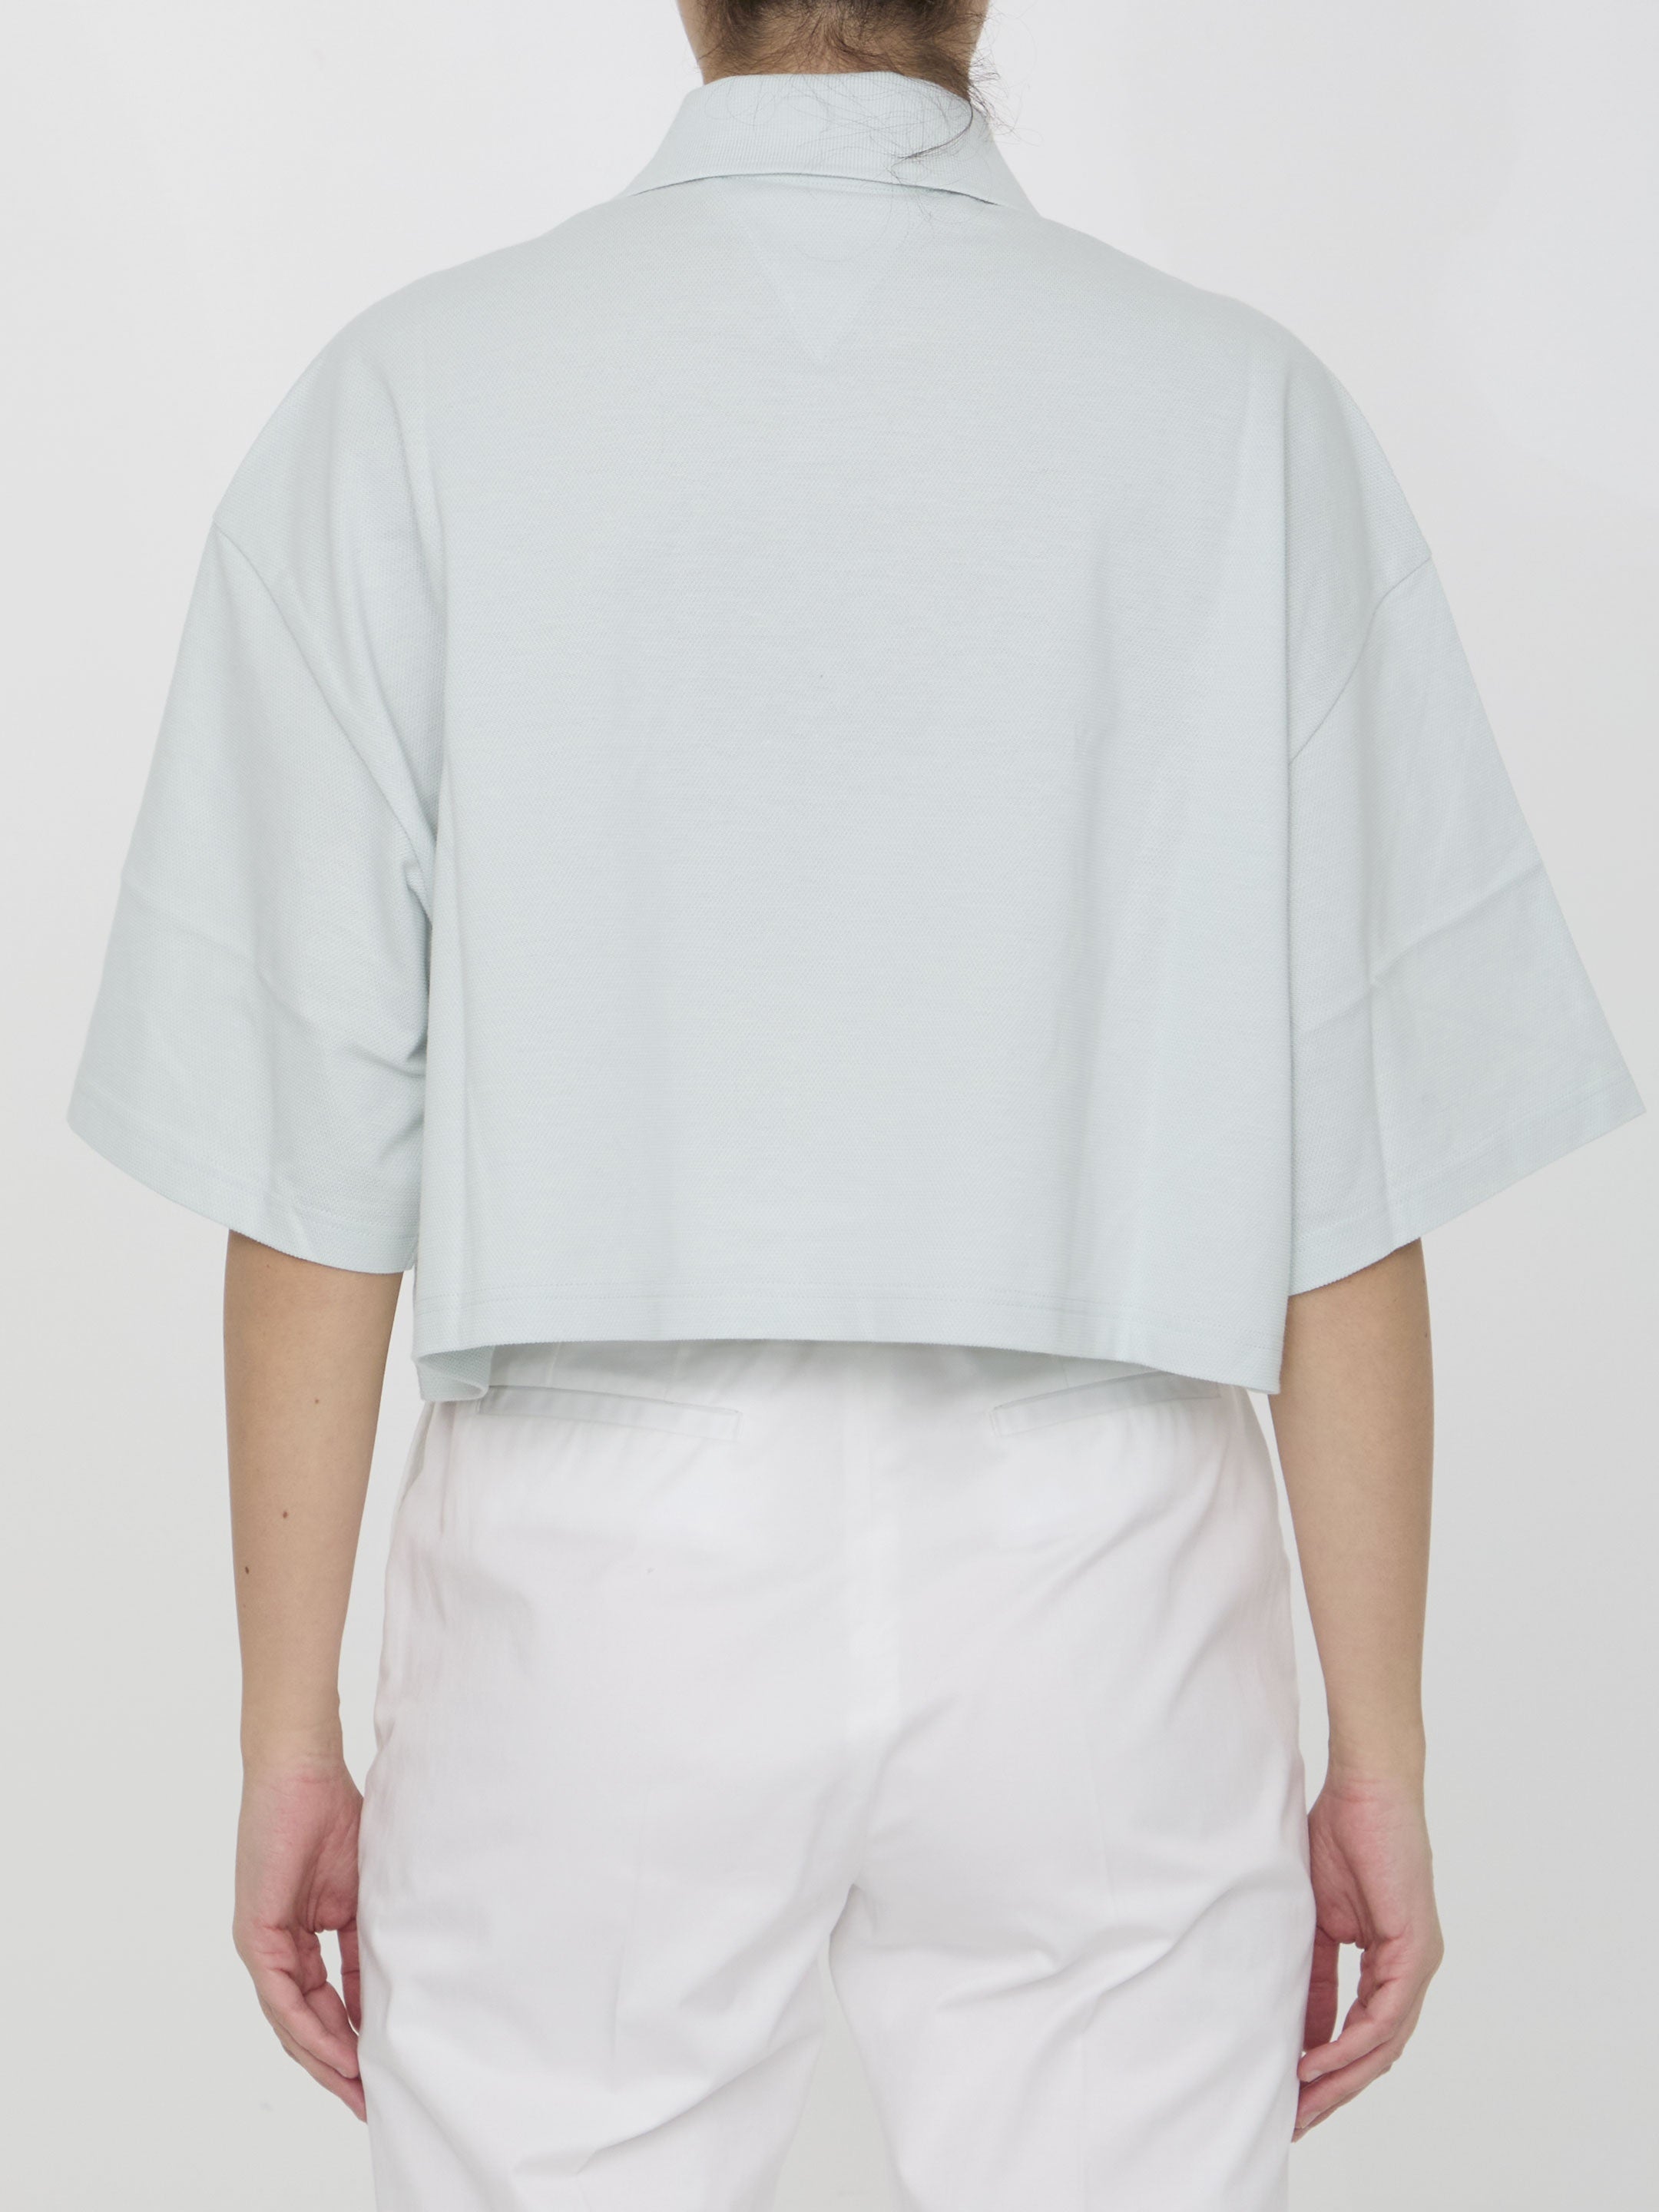 BOTTEGA-VENETA-OUTLET-SALE-Cropped-polo-shirt-Shirts-ARCHIVE-COLLECTION-4.jpg